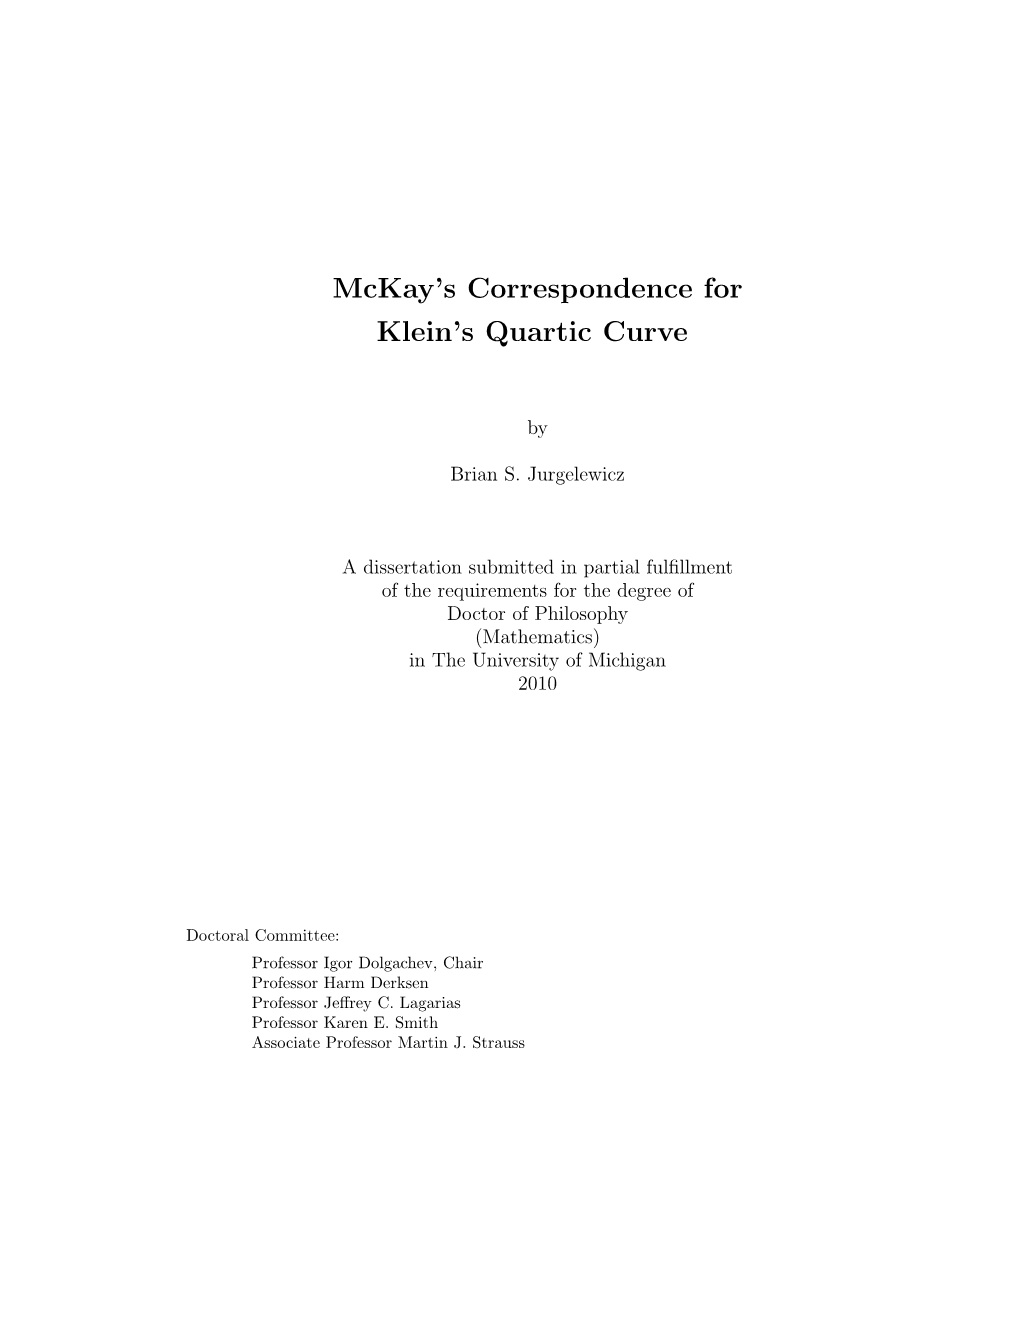 Mckay's Correspondence for Klein's Quartic Curve